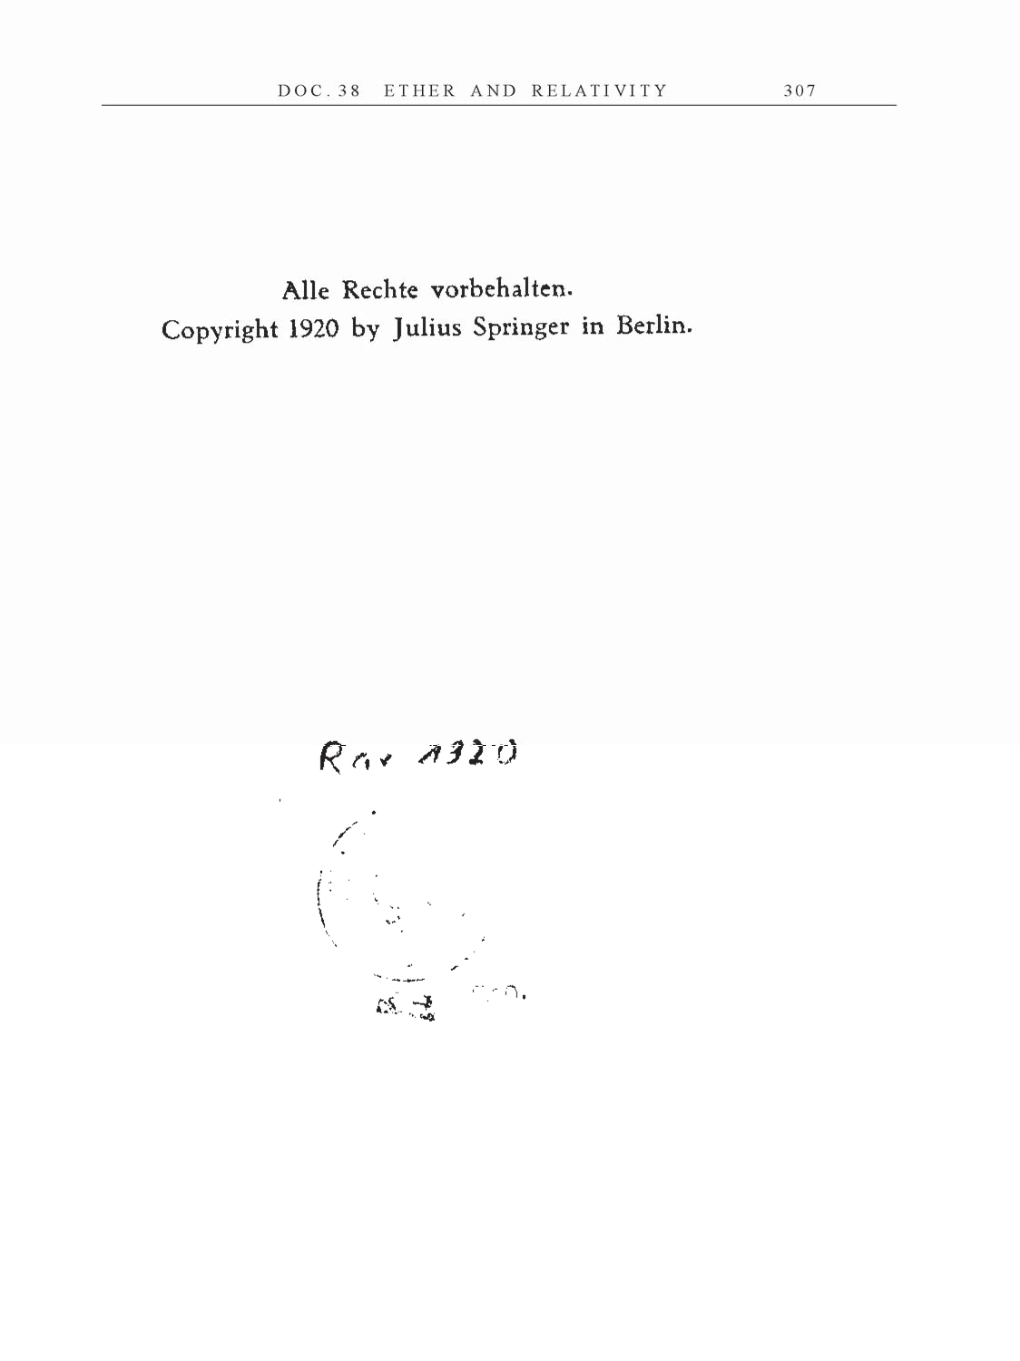 Volume 7: The Berlin Years: Writings, 1918-1921 page 307